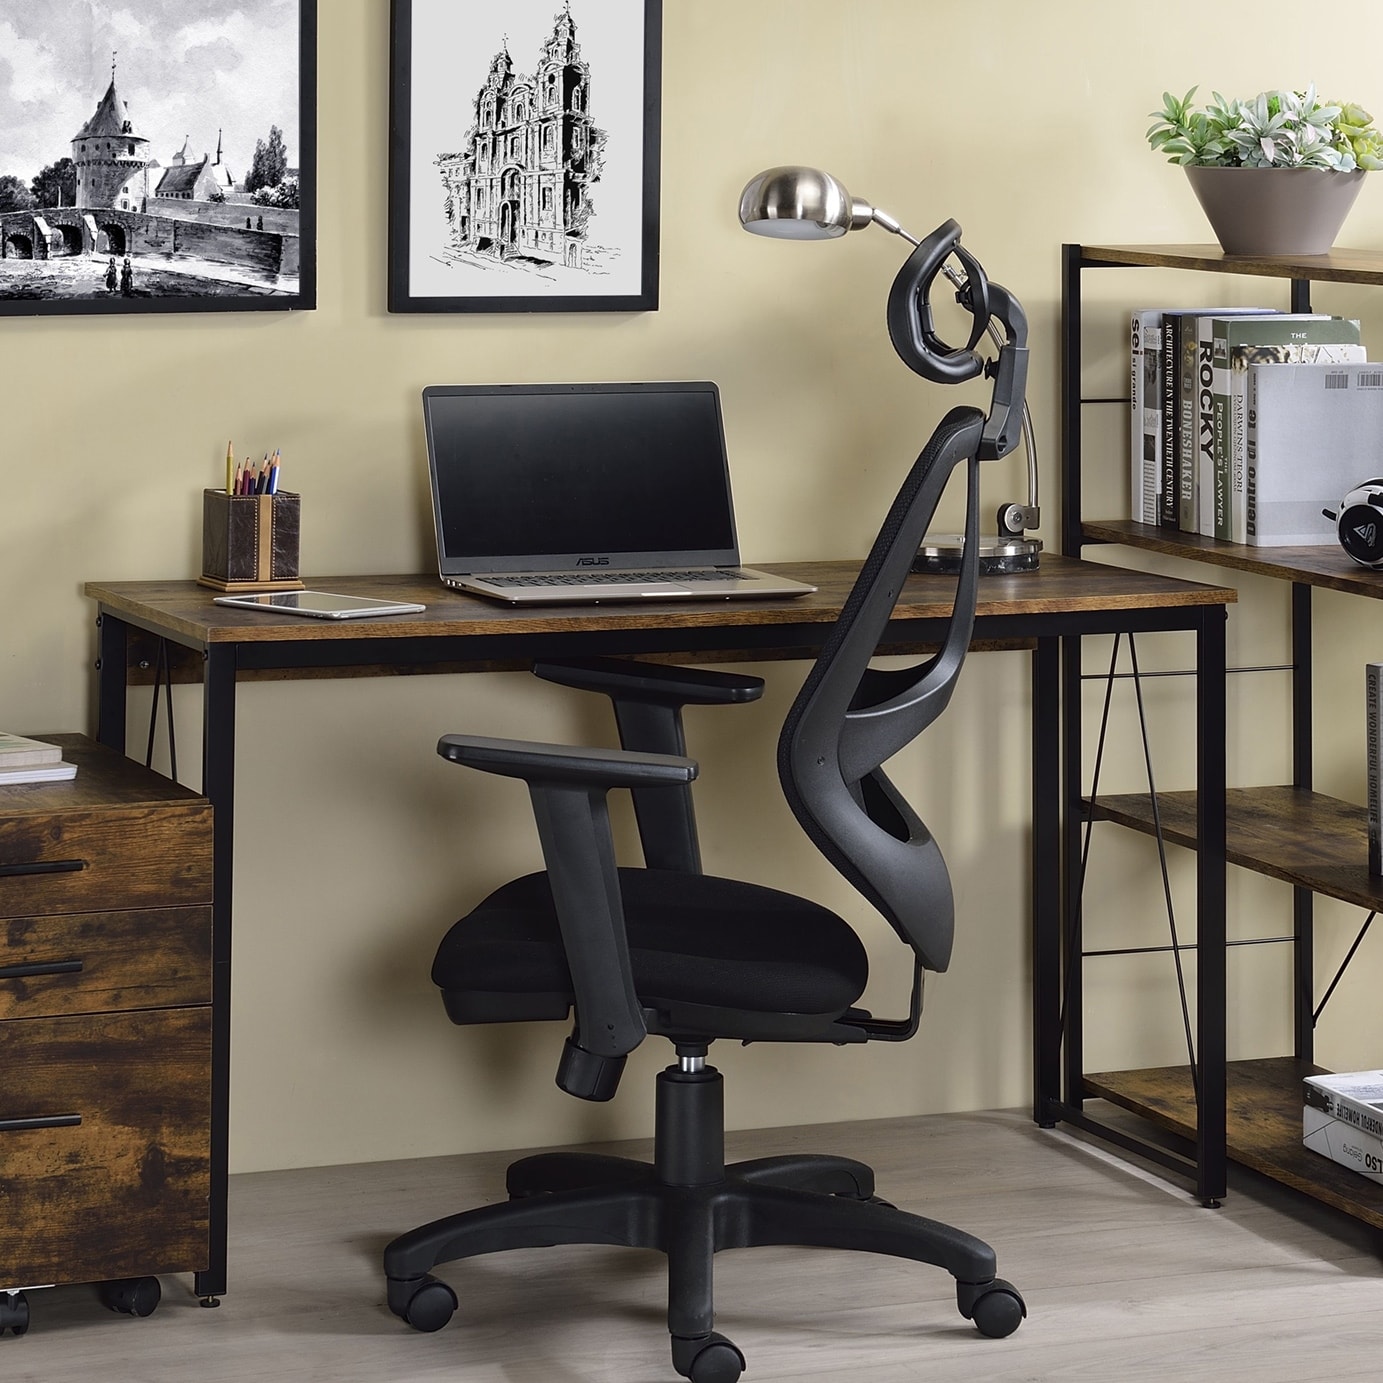 Caffoz Home Office 2-Drawer Writing Desk - Oak Brown